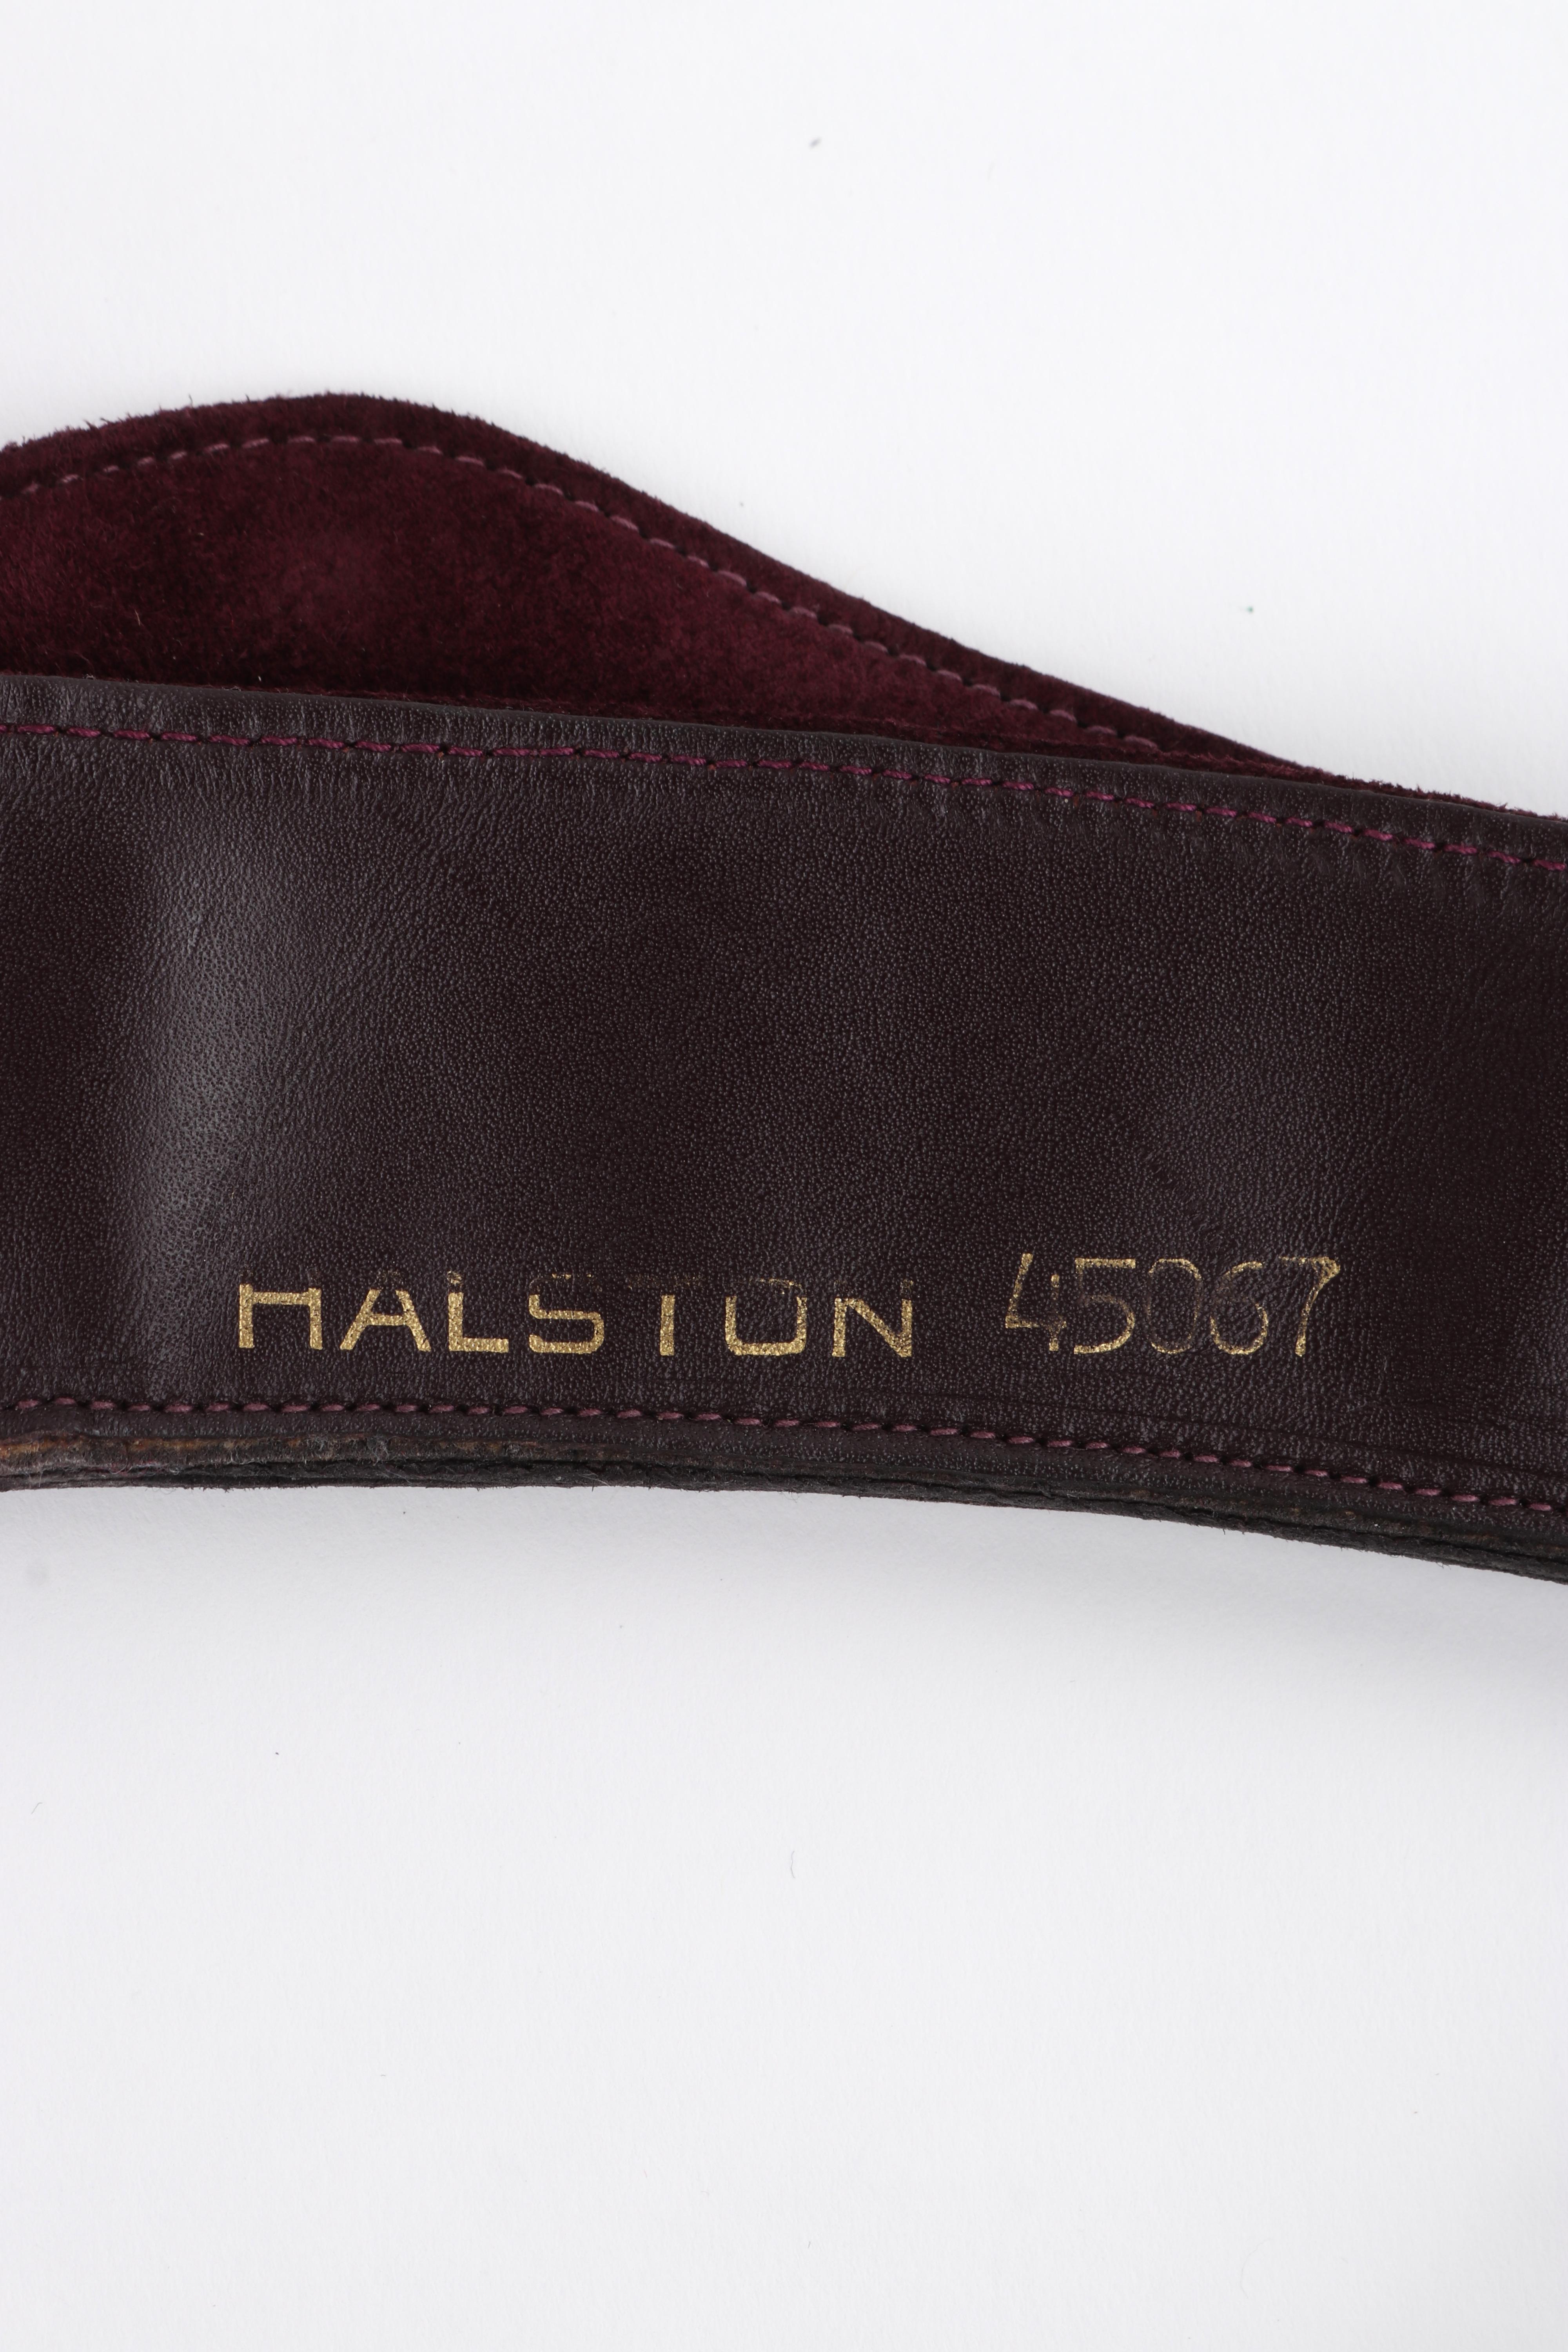 HALSTON c.1970's Burgundy Suede Leather Art Deco Avant Garde Tied Obi Waist Belt 2